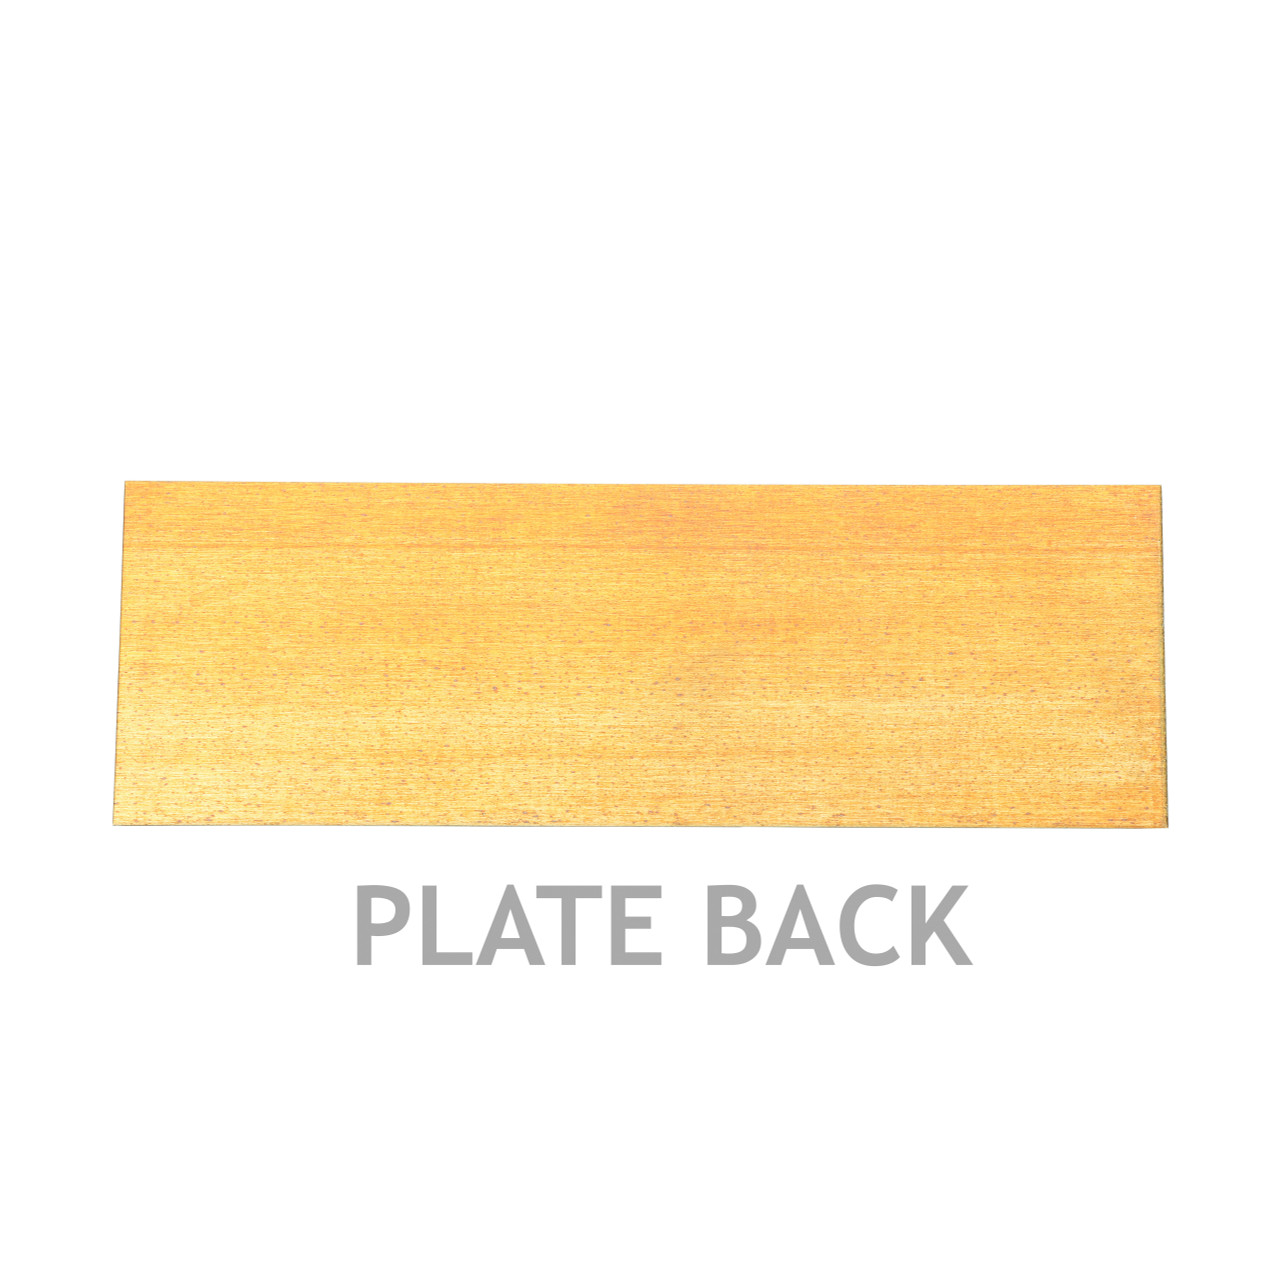 1x3 Custom Engraved Sublimation Gold Color Plate Plaque Name Tag Trophy Flag